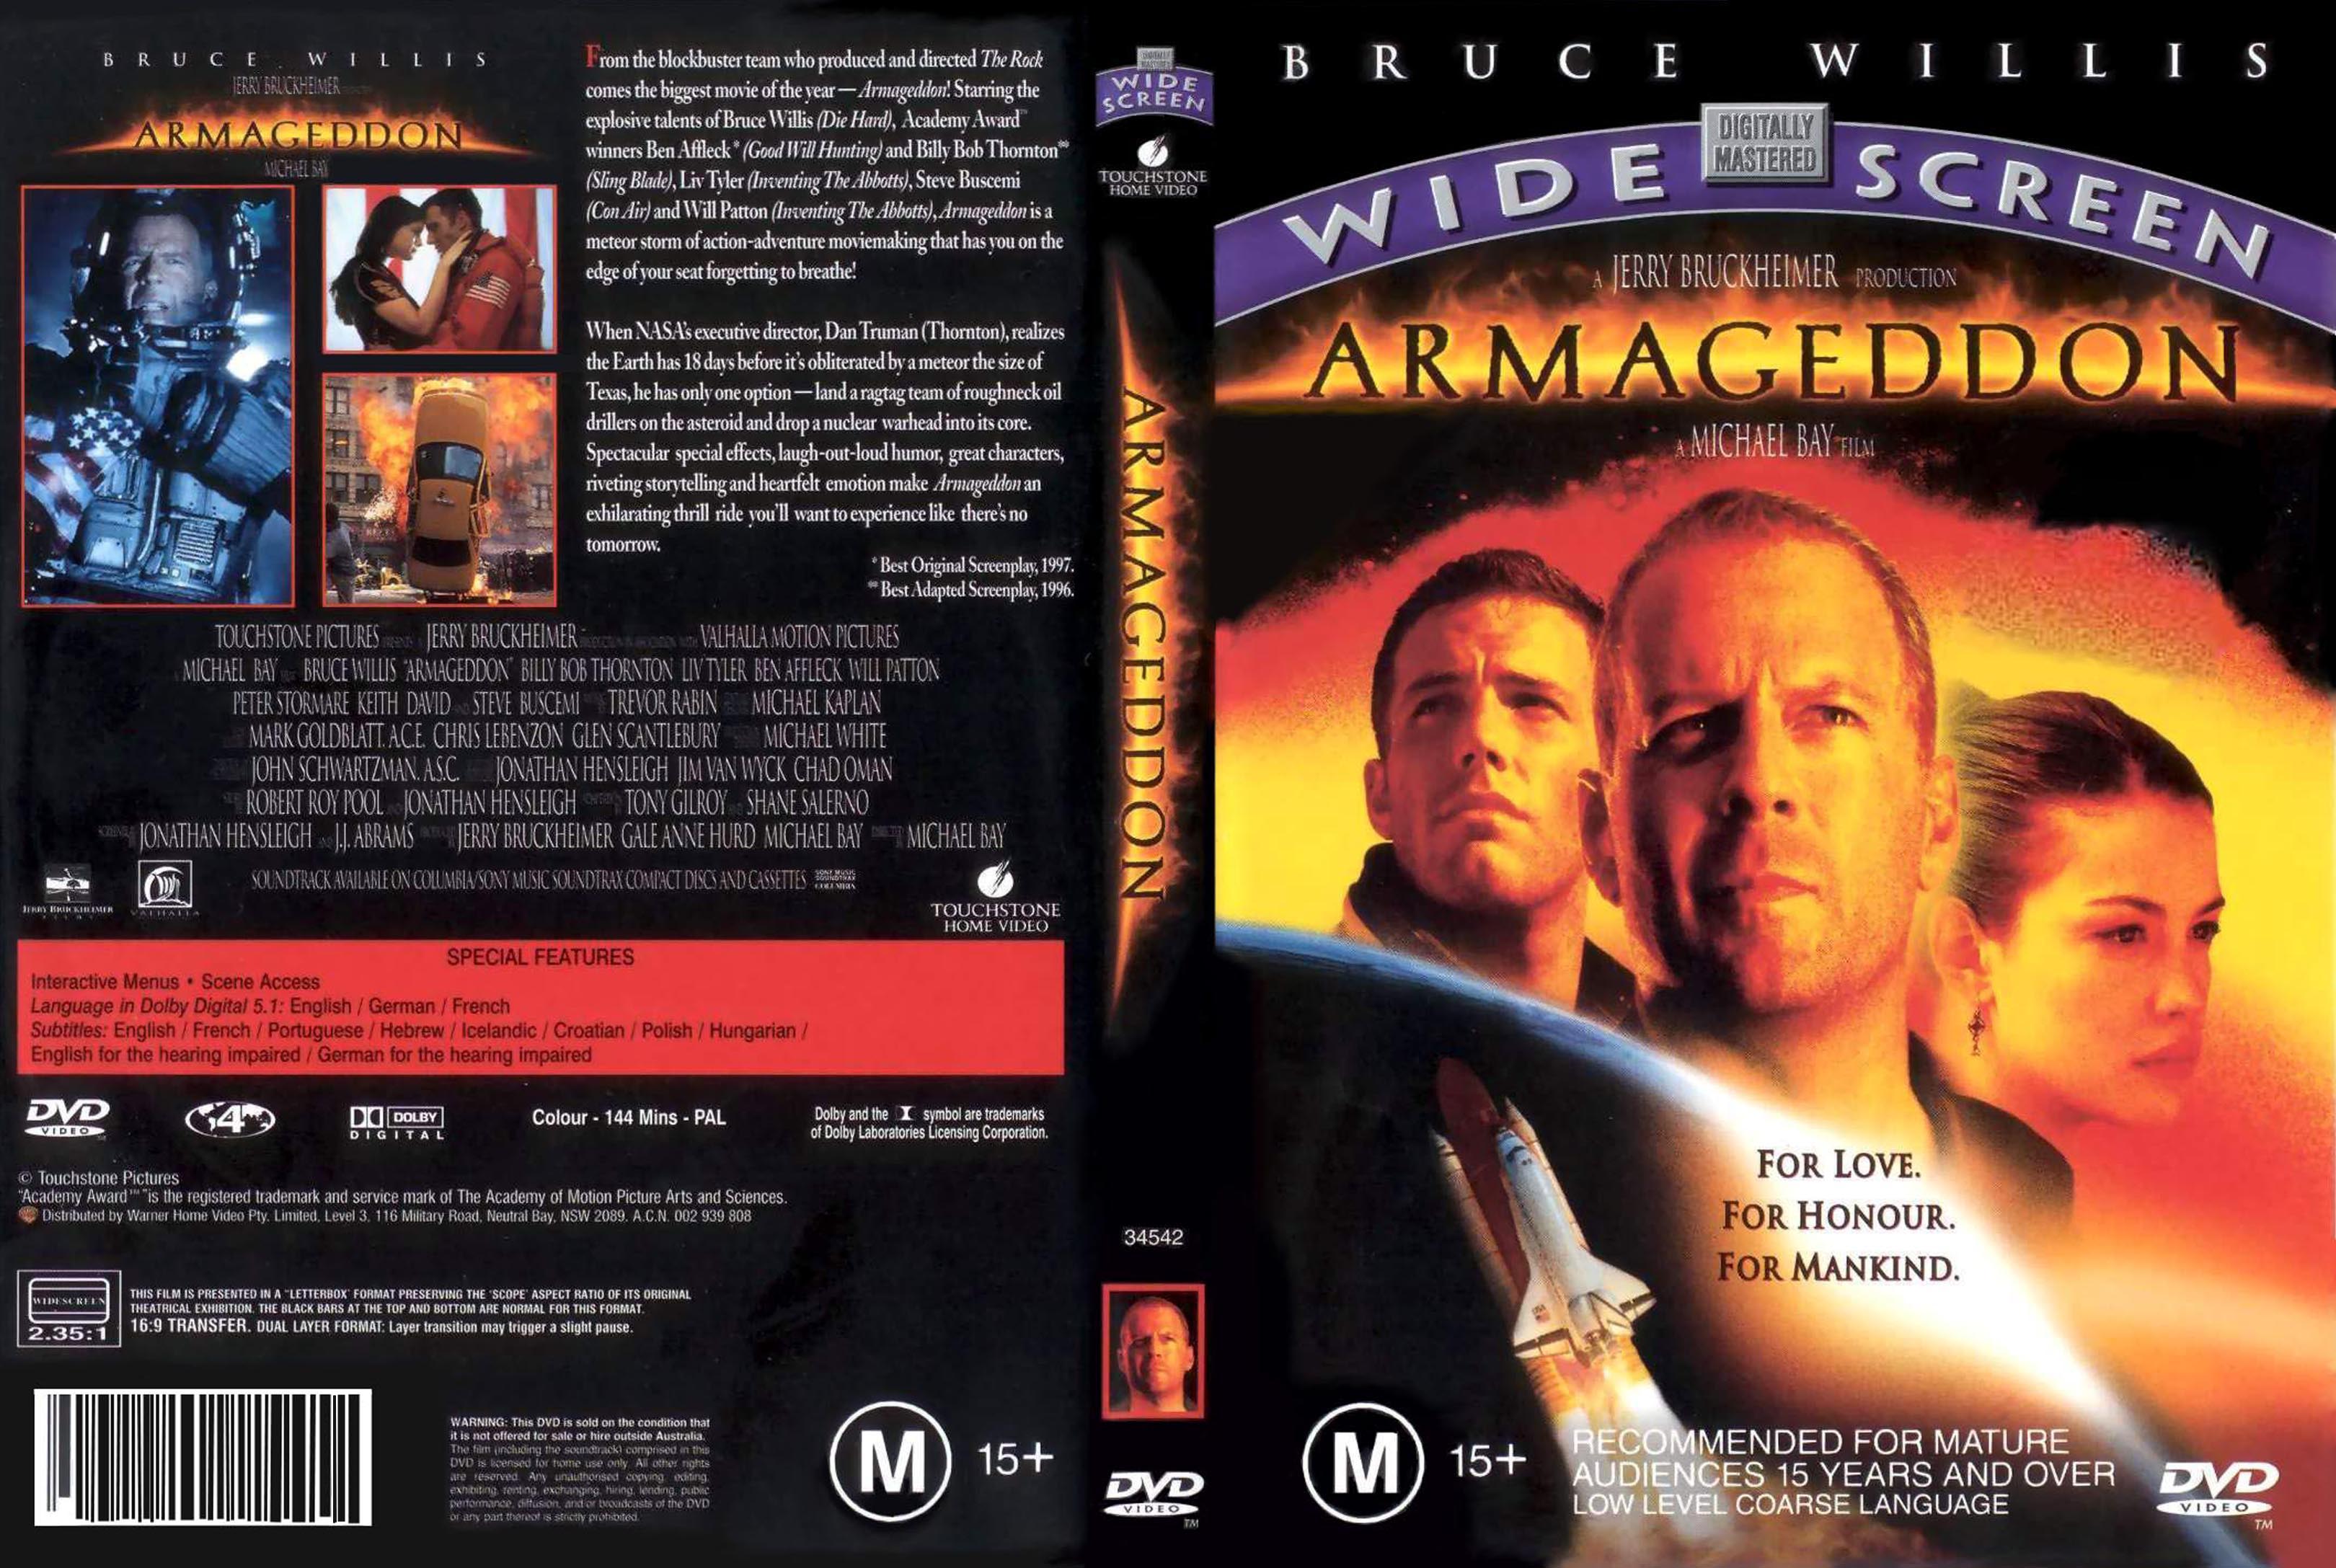 Код армагеддон. Cover. Обложка DVD Армагеддон. 1998. Армагеддон 1998 обложка Blu ray. Армагеддон 1998 DVD Cover. Armageddon 1998 DVD Cover.